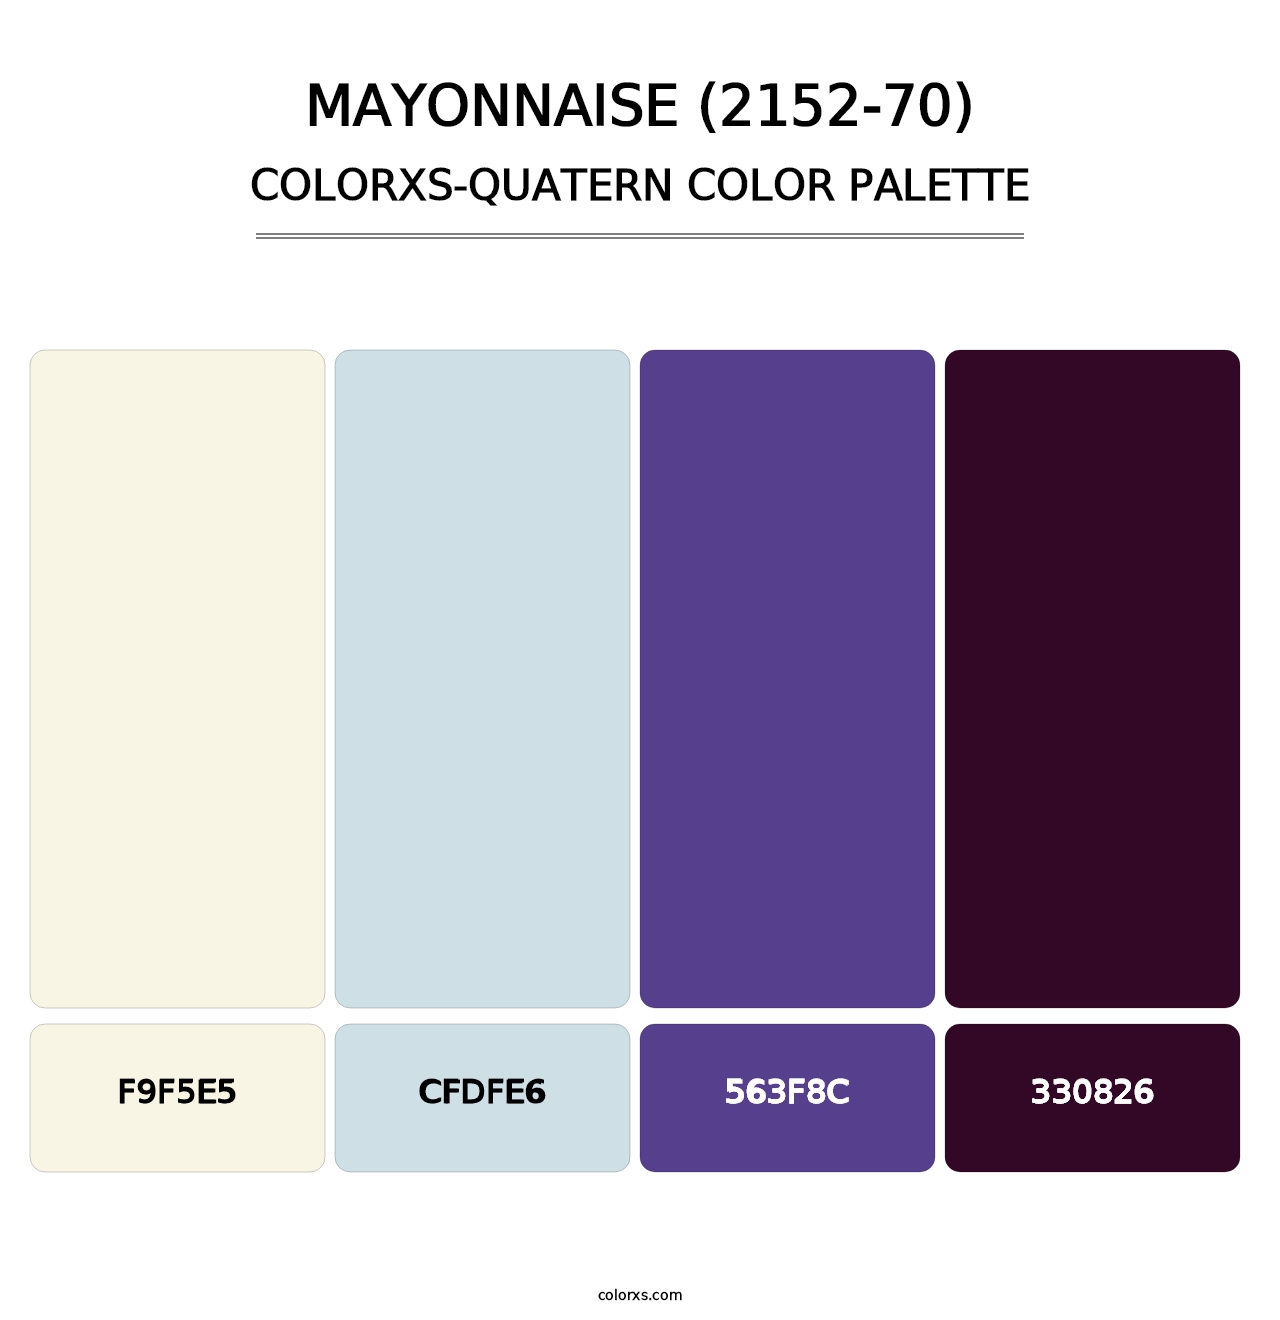 Mayonnaise (2152-70) - Colorxs Quatern Palette